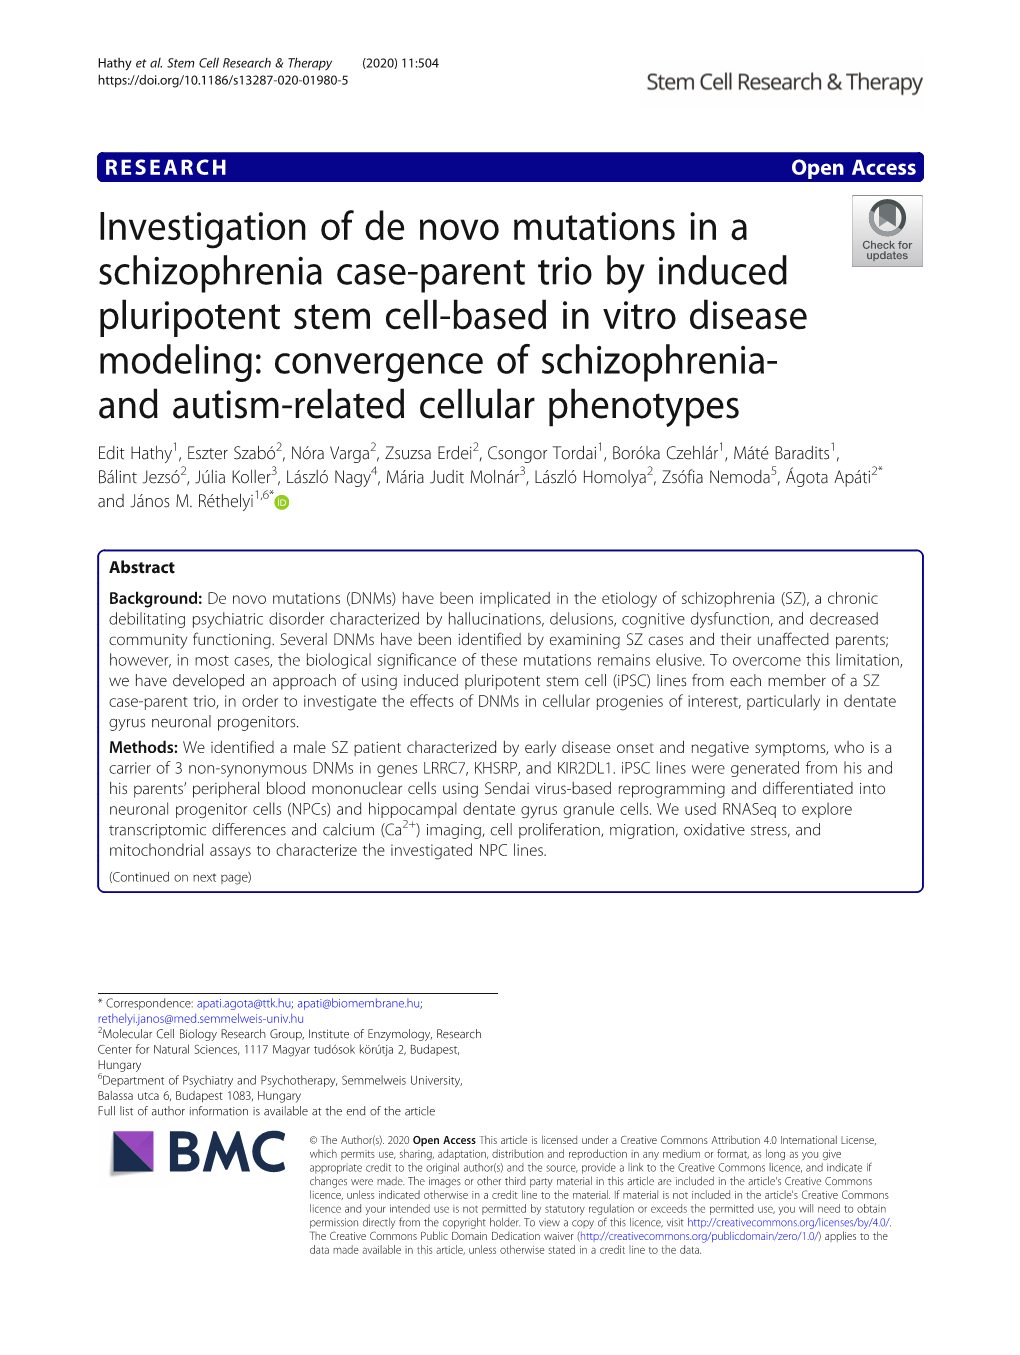 Investigation of De Novo Mutations in a Schizophrenia Case-Parent Trio By